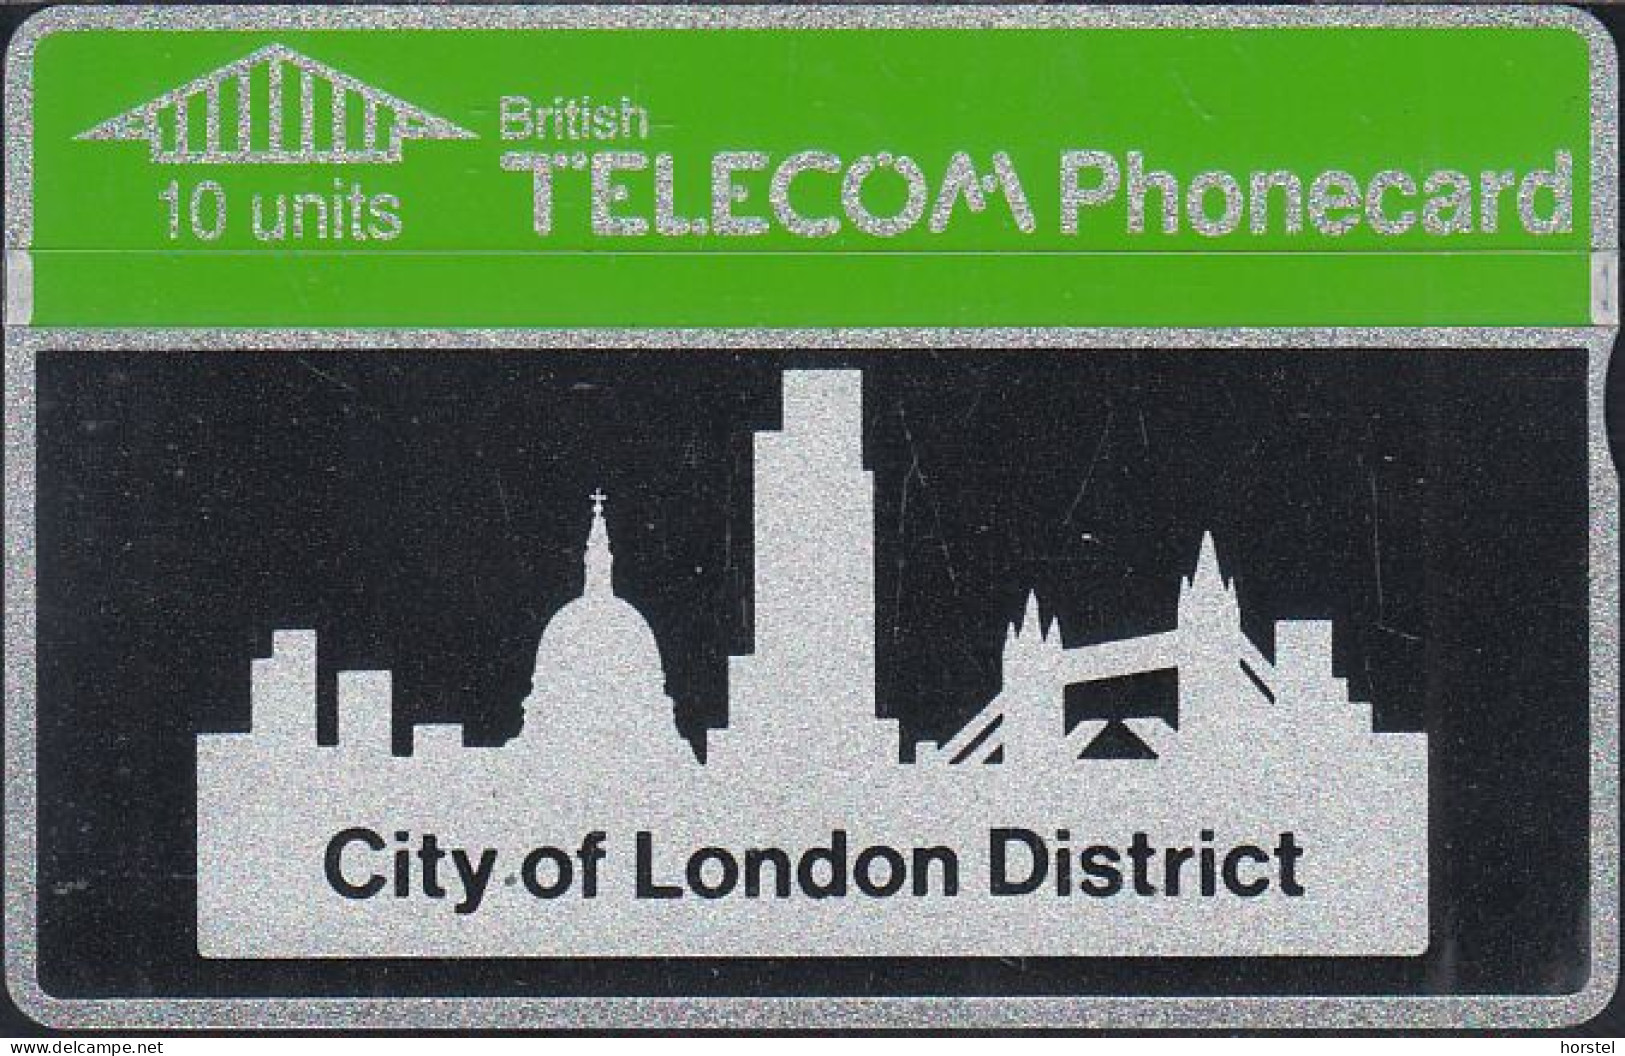 UK British Telecom Phonecard - L&G Bti 0004 - 10 Units - City Of London District - 123A - Mint - BT Interne